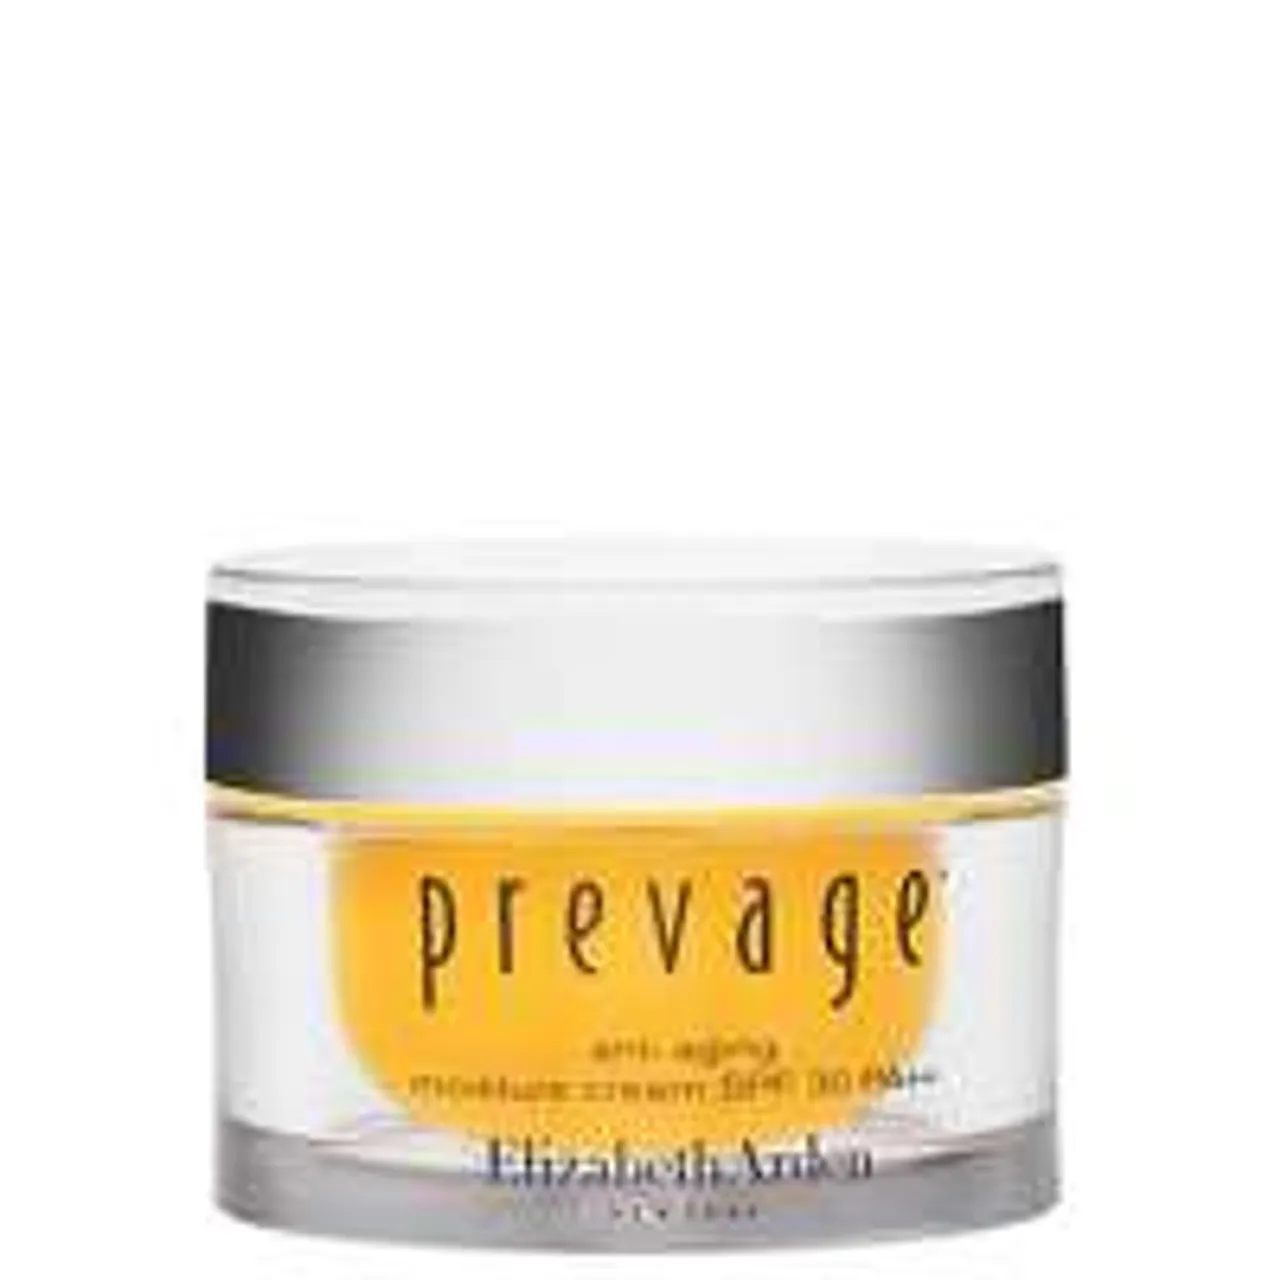 Elizabeth Arden Prevage Anti-aging Moisture Cream SPF30 50ml / 1.7 fl.oz.